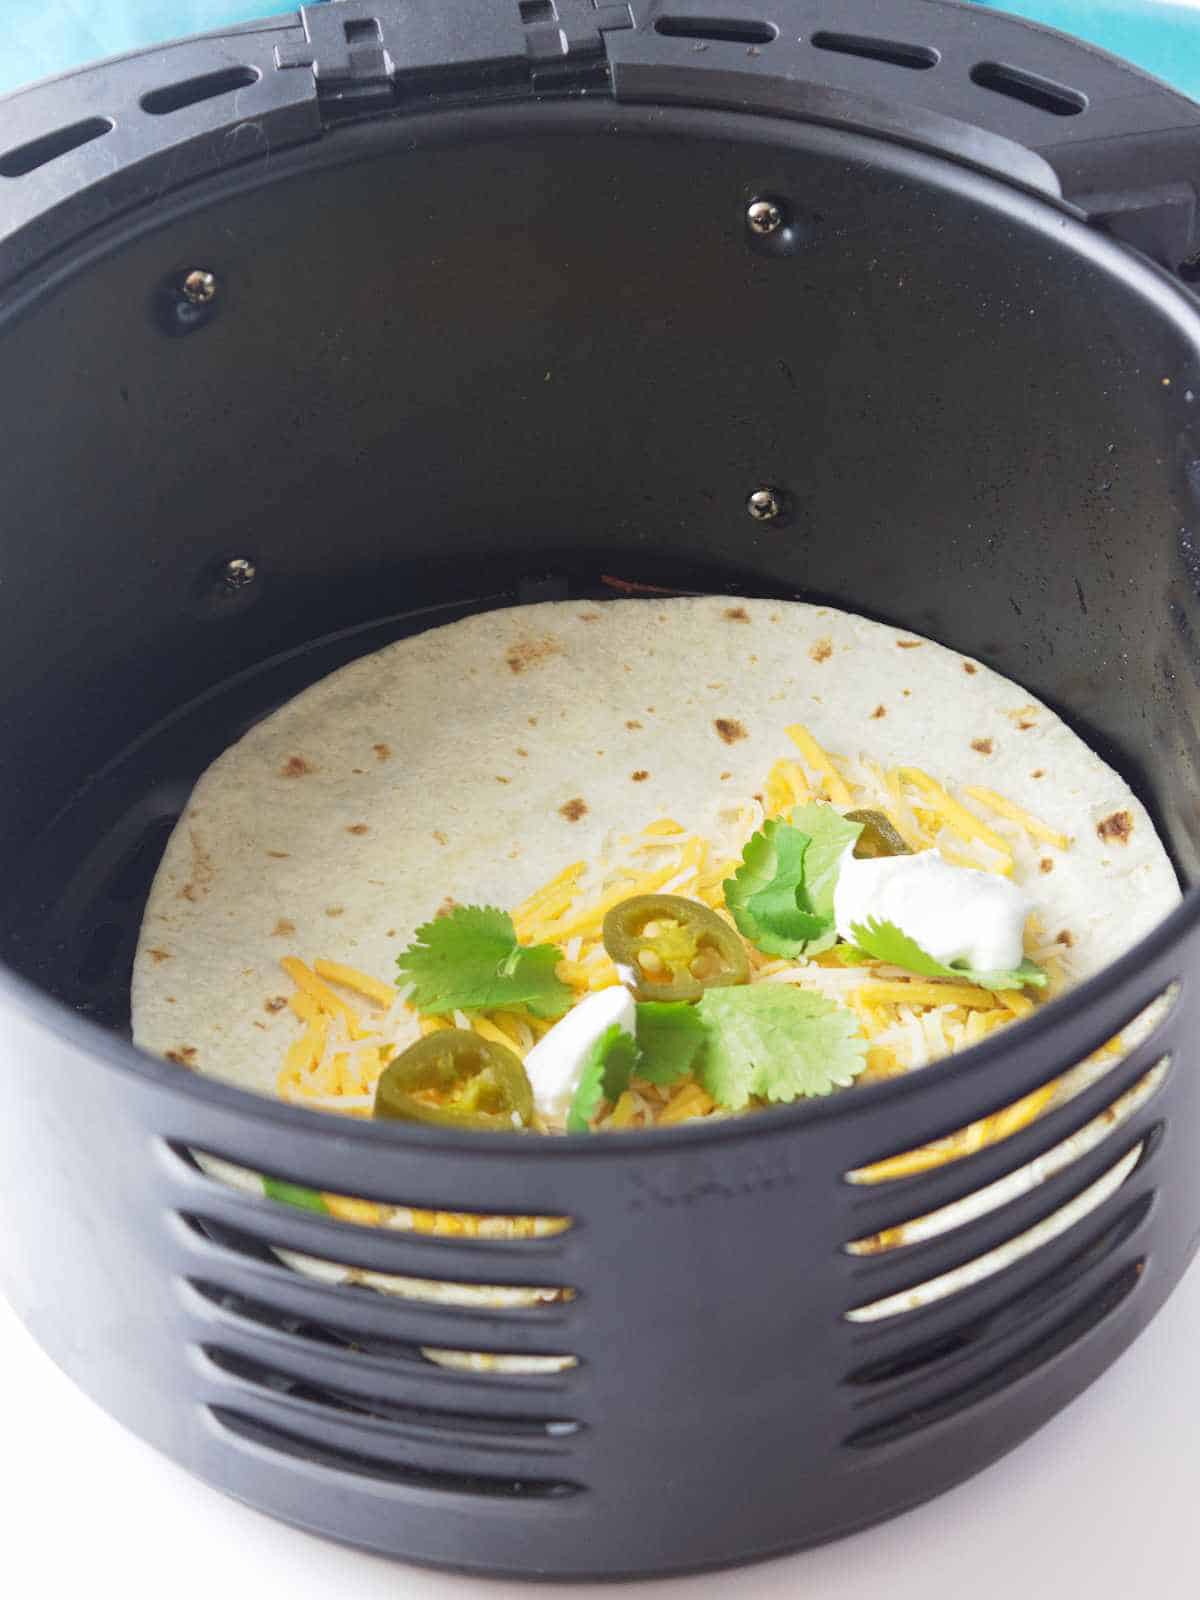 cheese quesadilla in an air fryer basket.